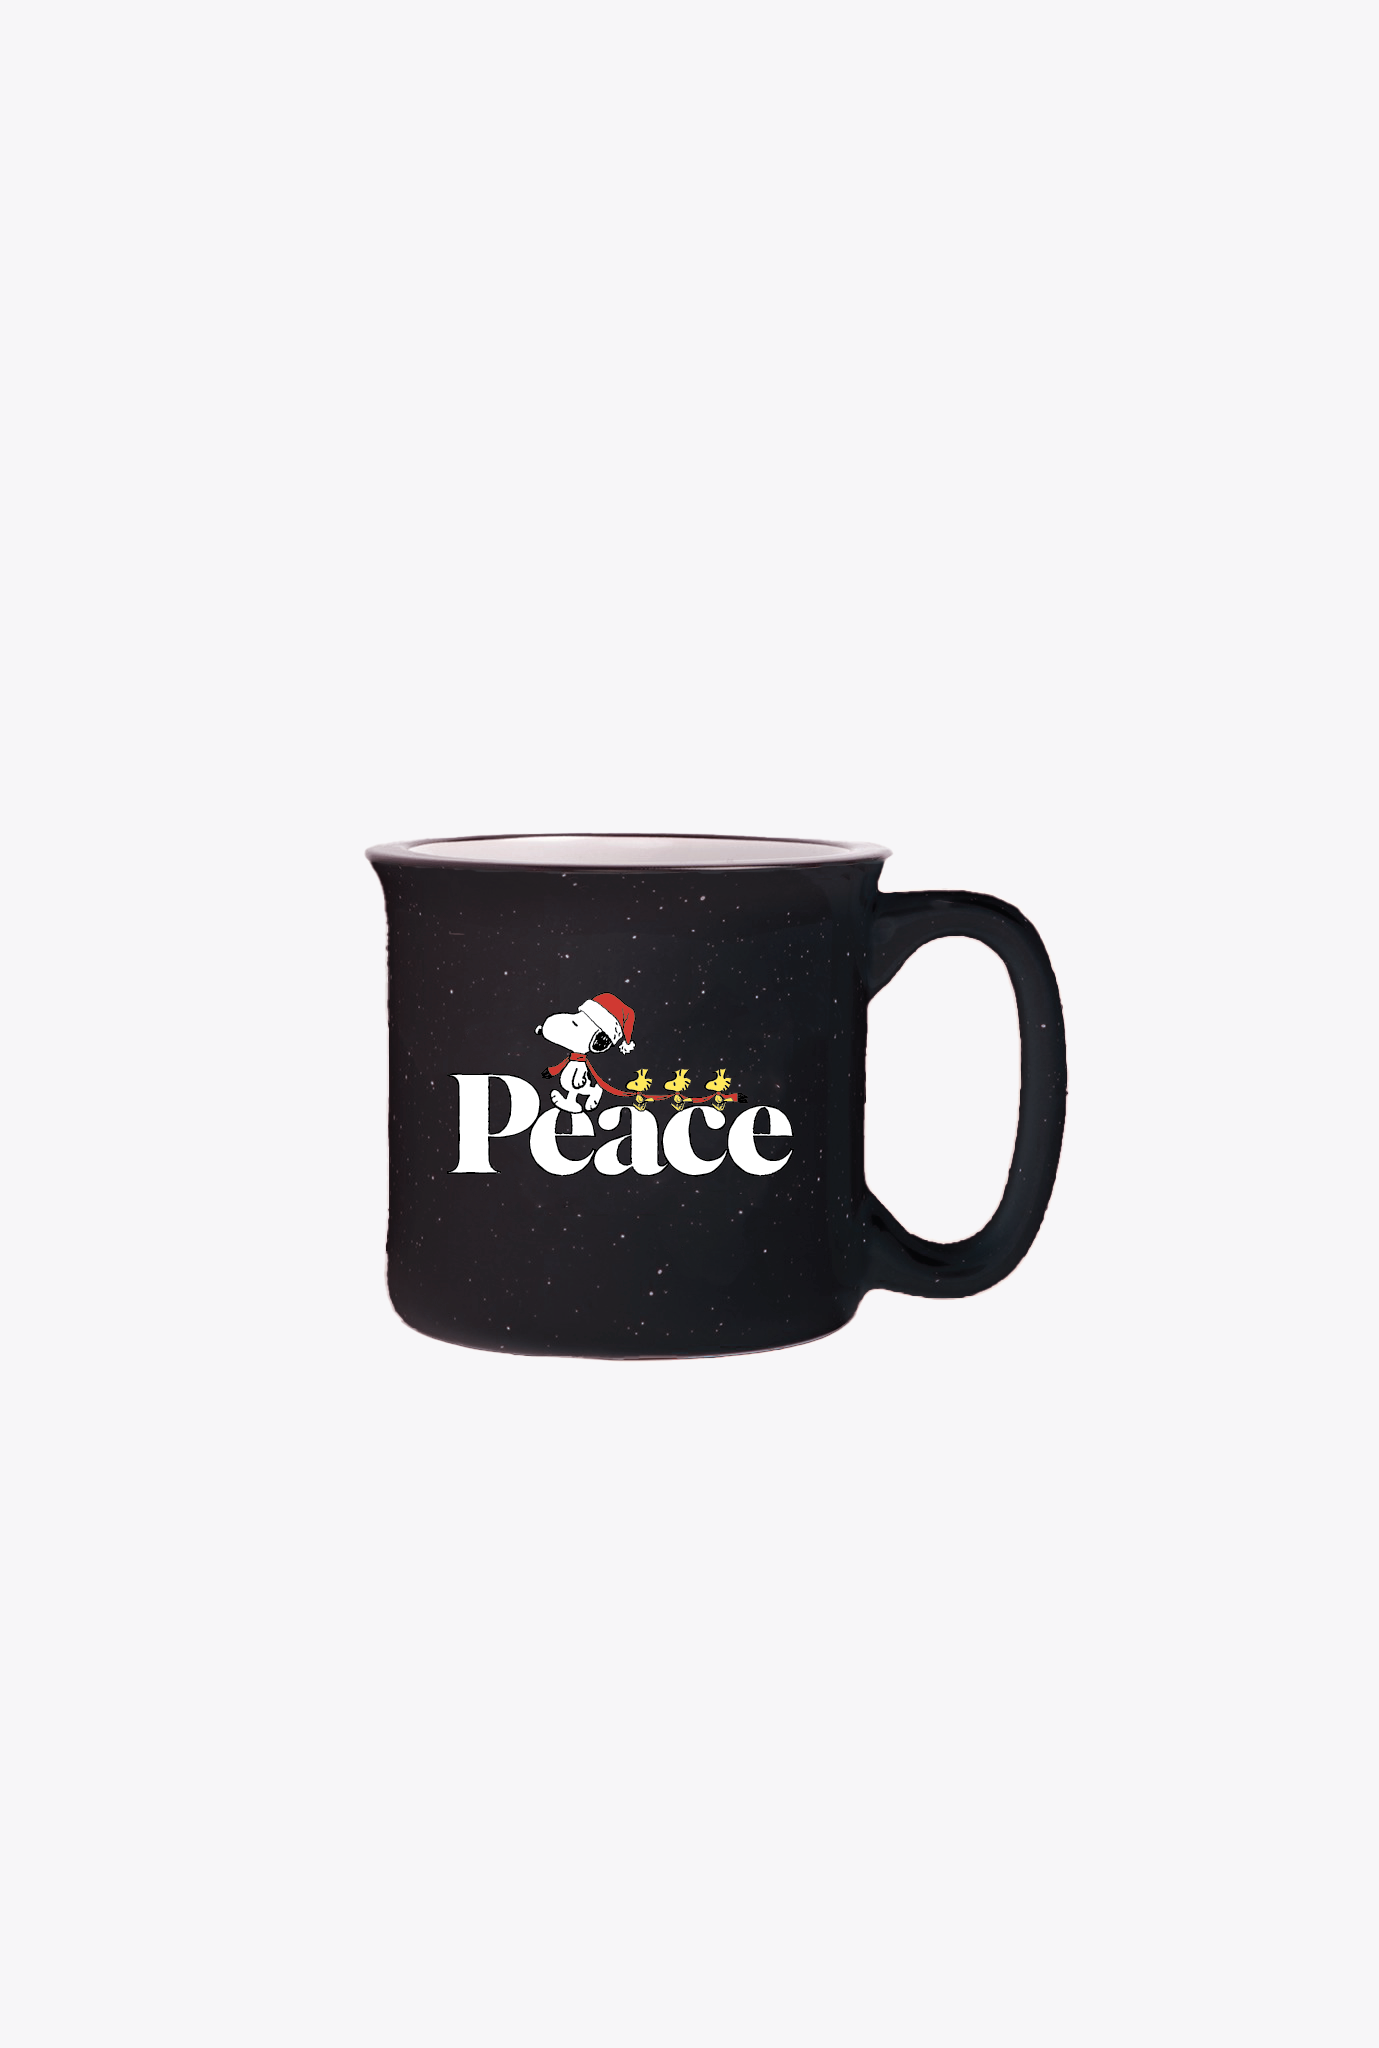 P/C x Peanuts Snoopy Peace Campfire Mug - Black